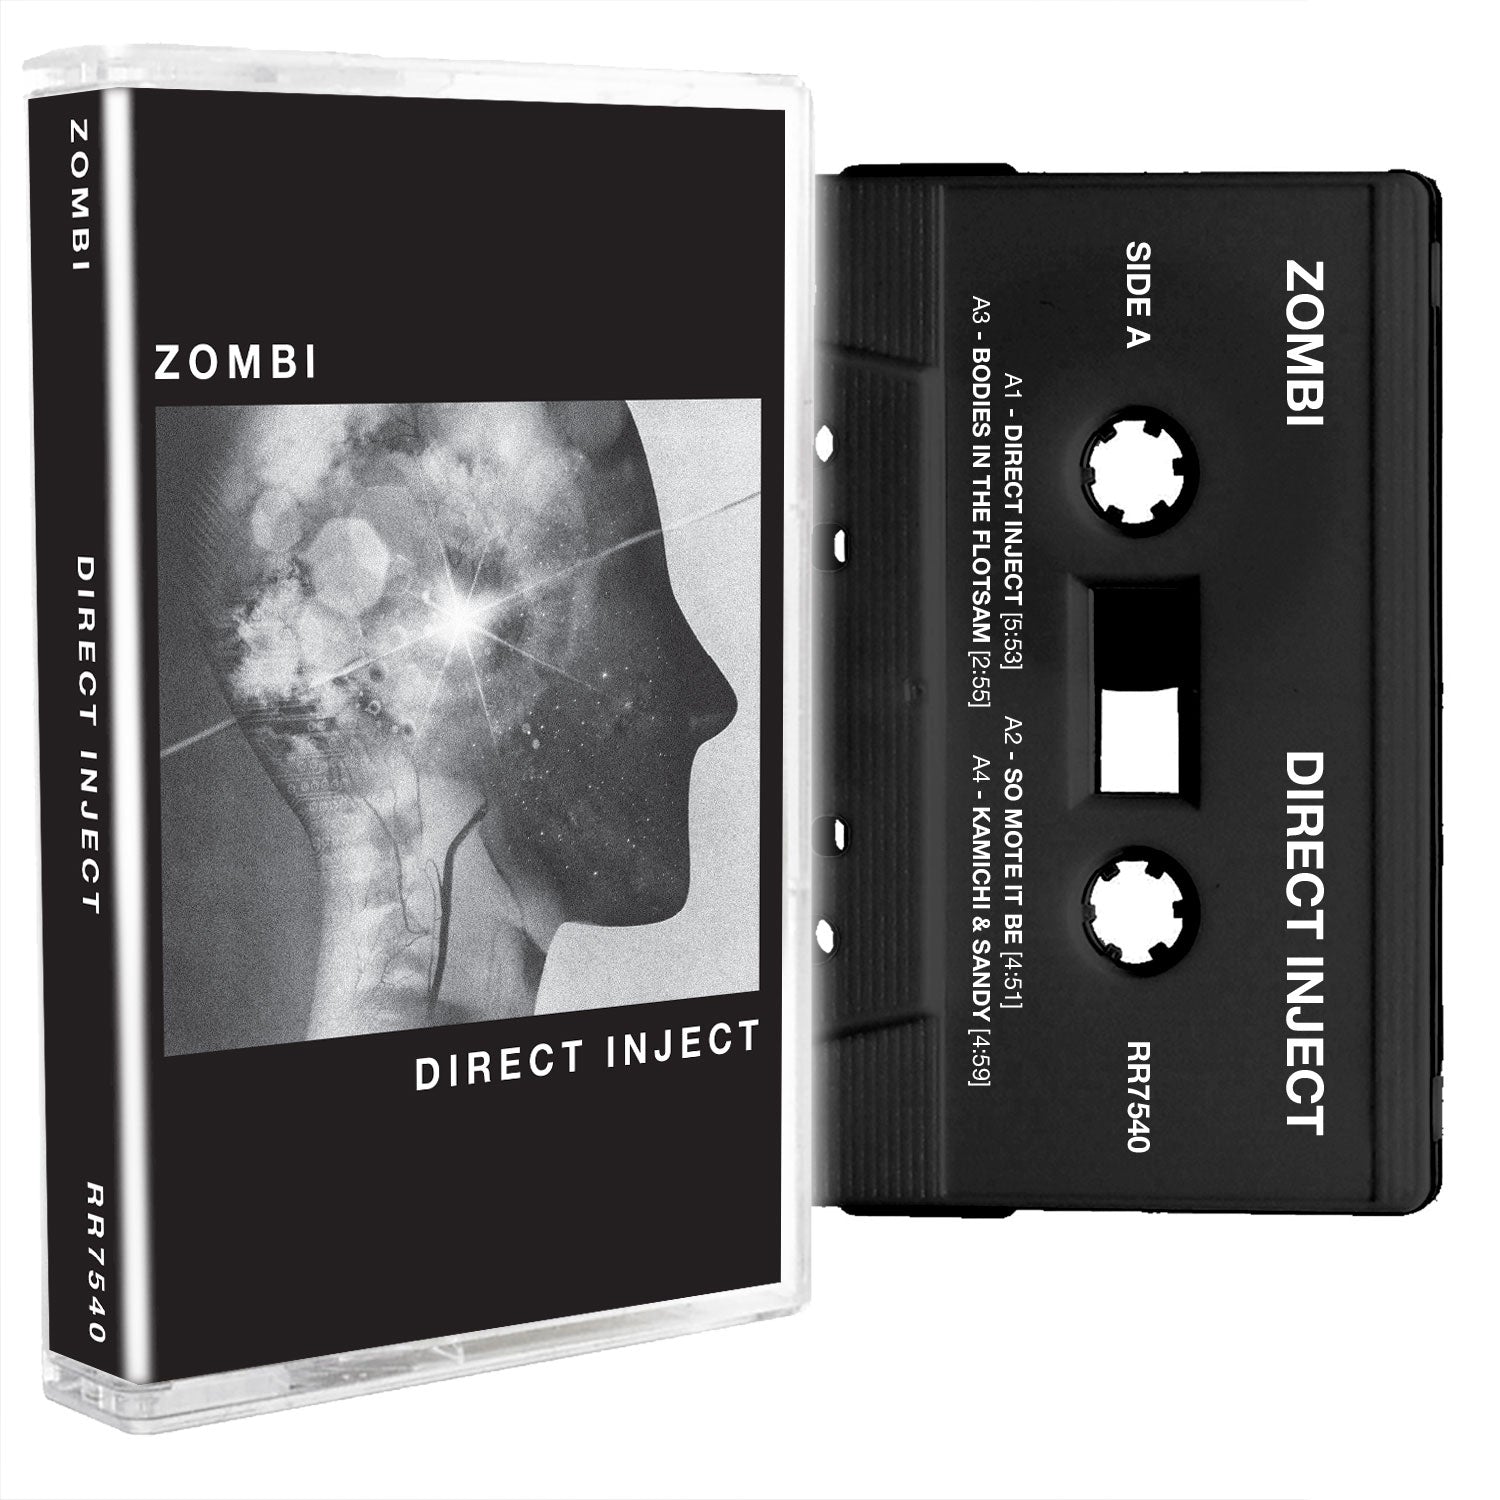 Zombi "Direct Inject" Cassette